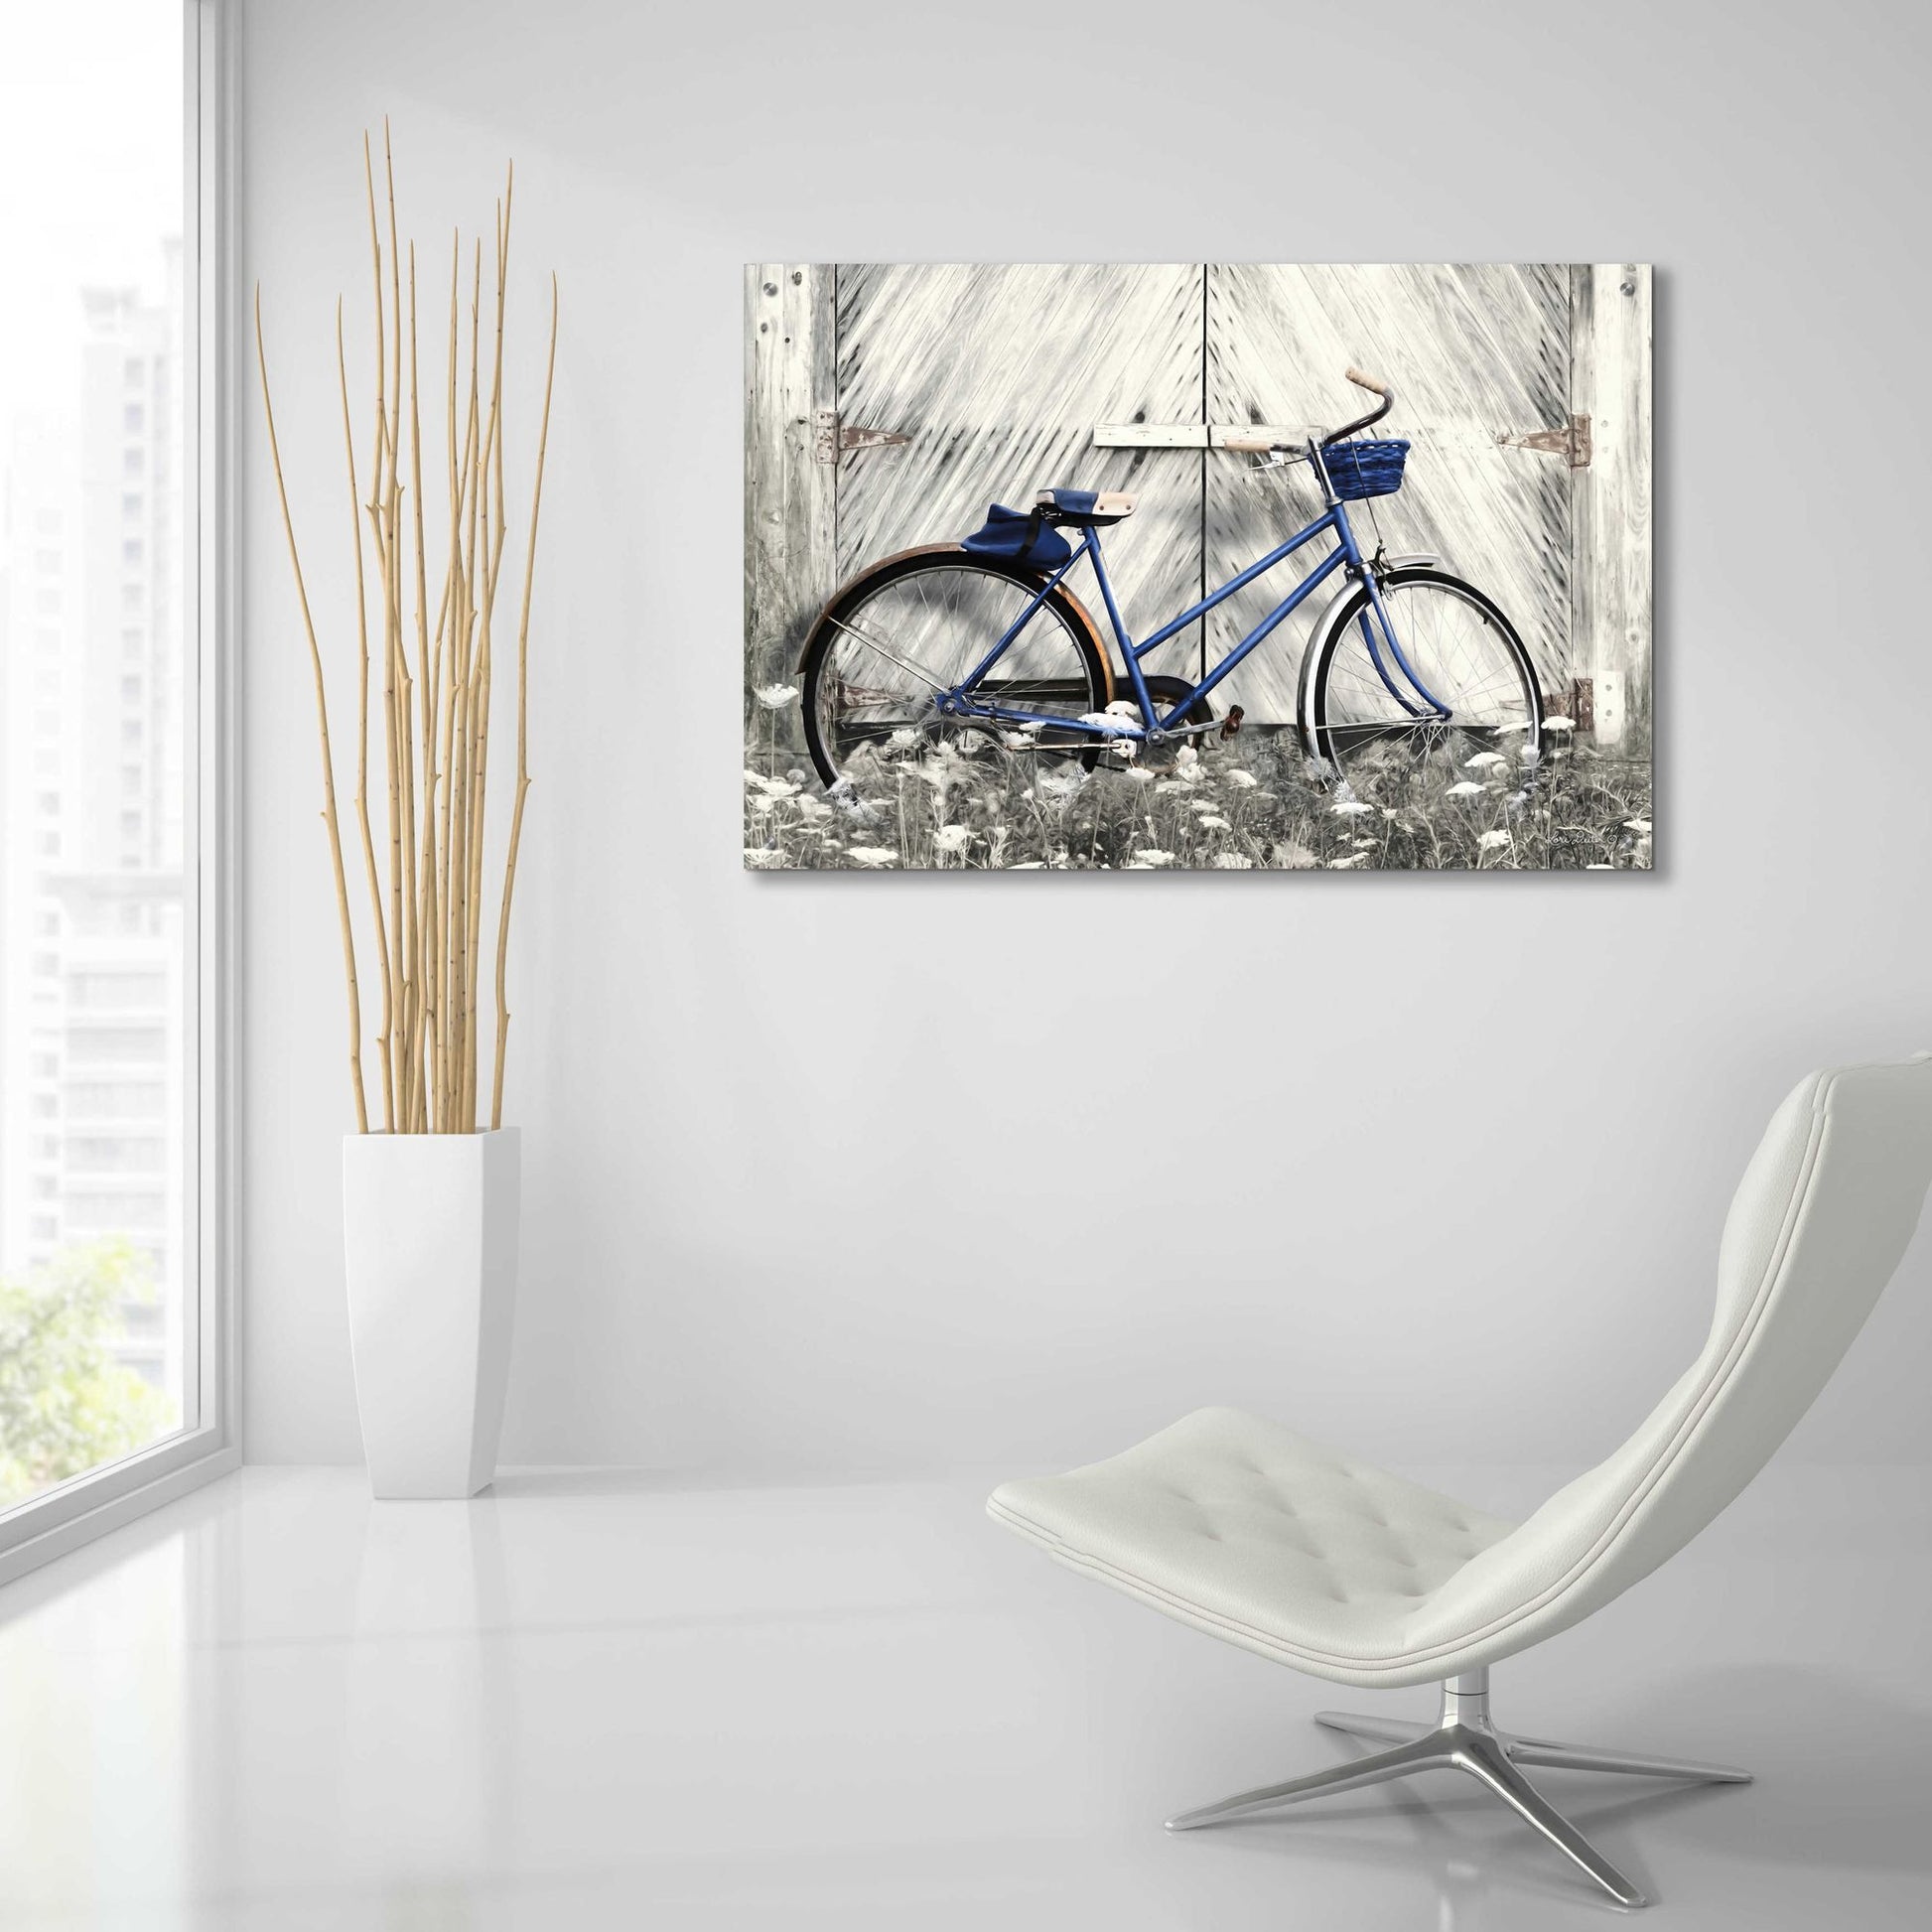 Epic Art 'Blue Bike at Barn' by Lori Deiter Acrylic Glass Wall Art,36x24